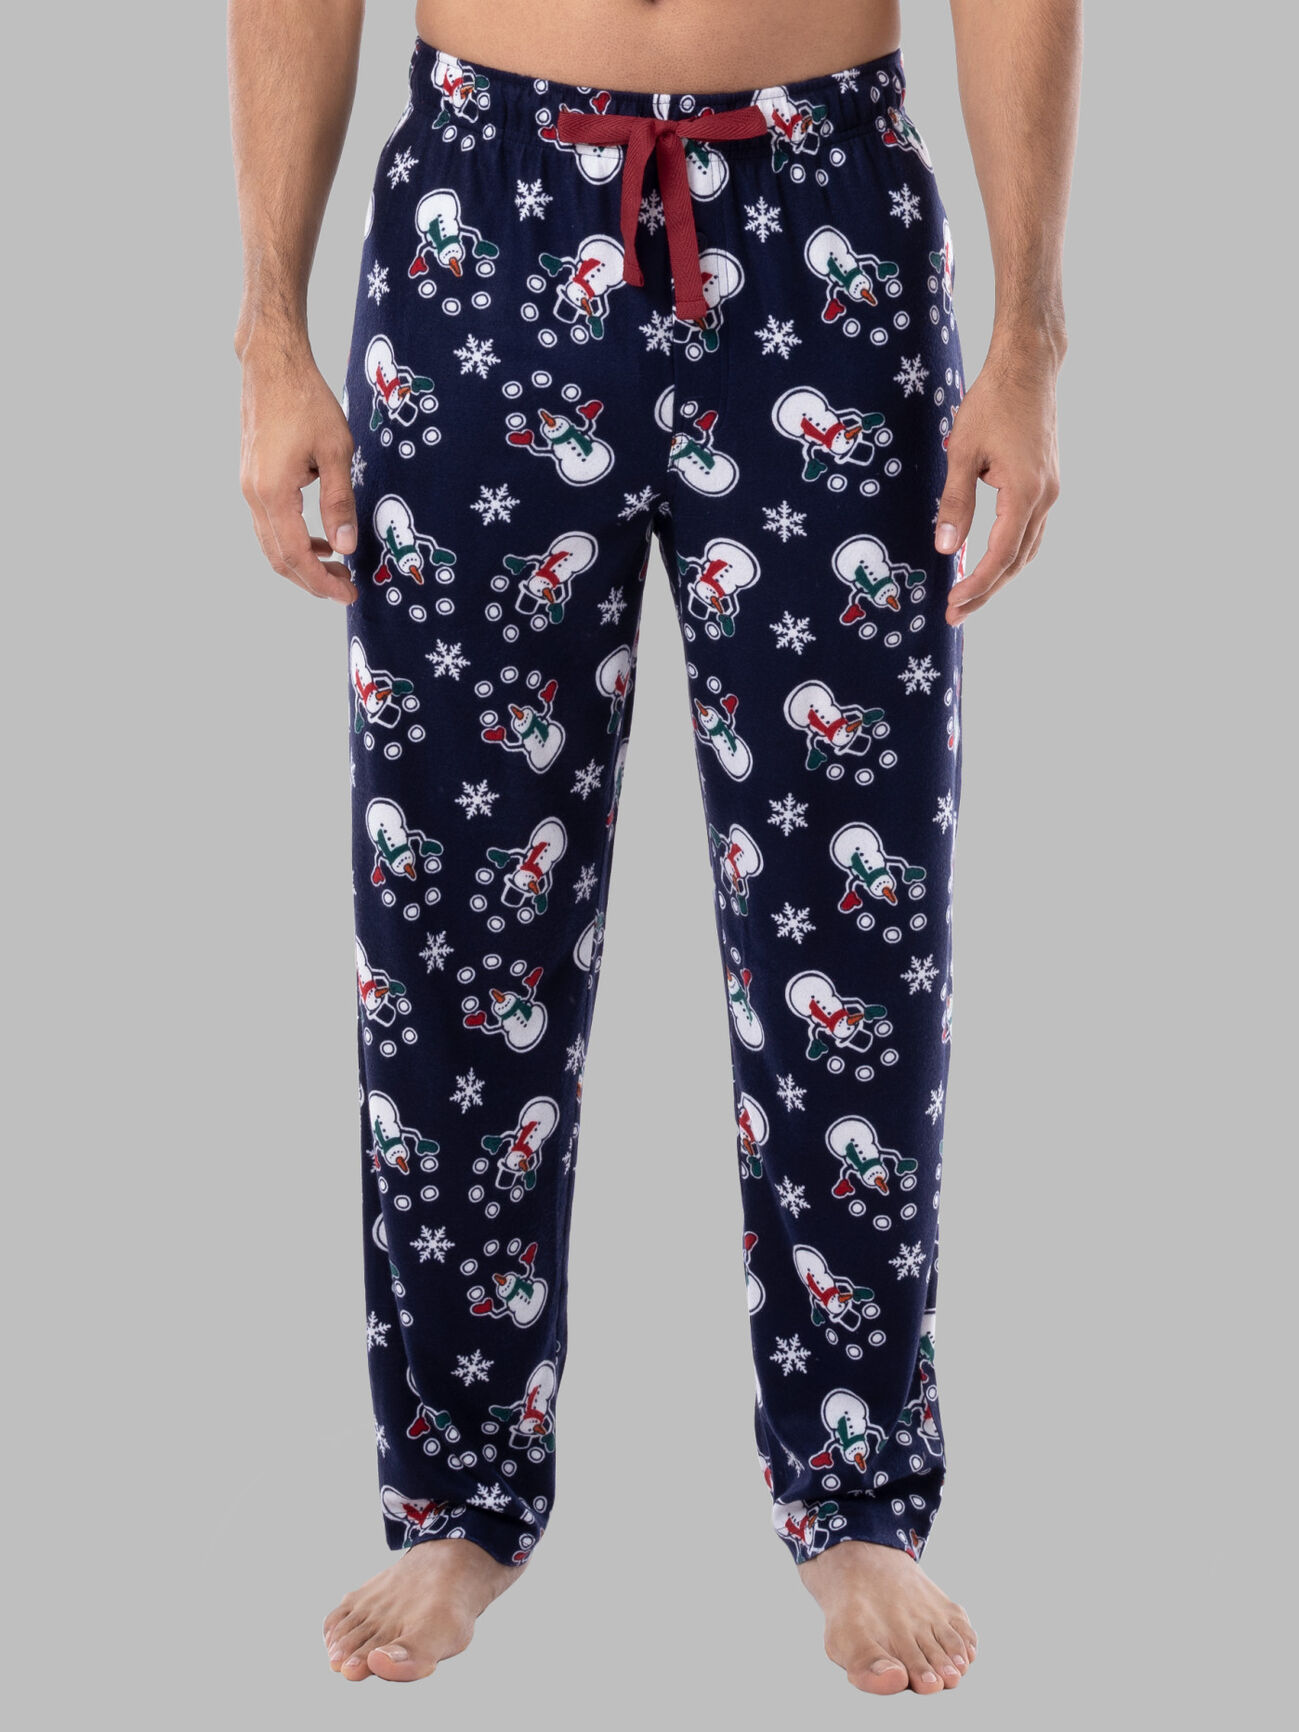 Women Pajama Pants Warm Fleece Lounge Pants Sleepwear Bottoms Trousers with  Pockets